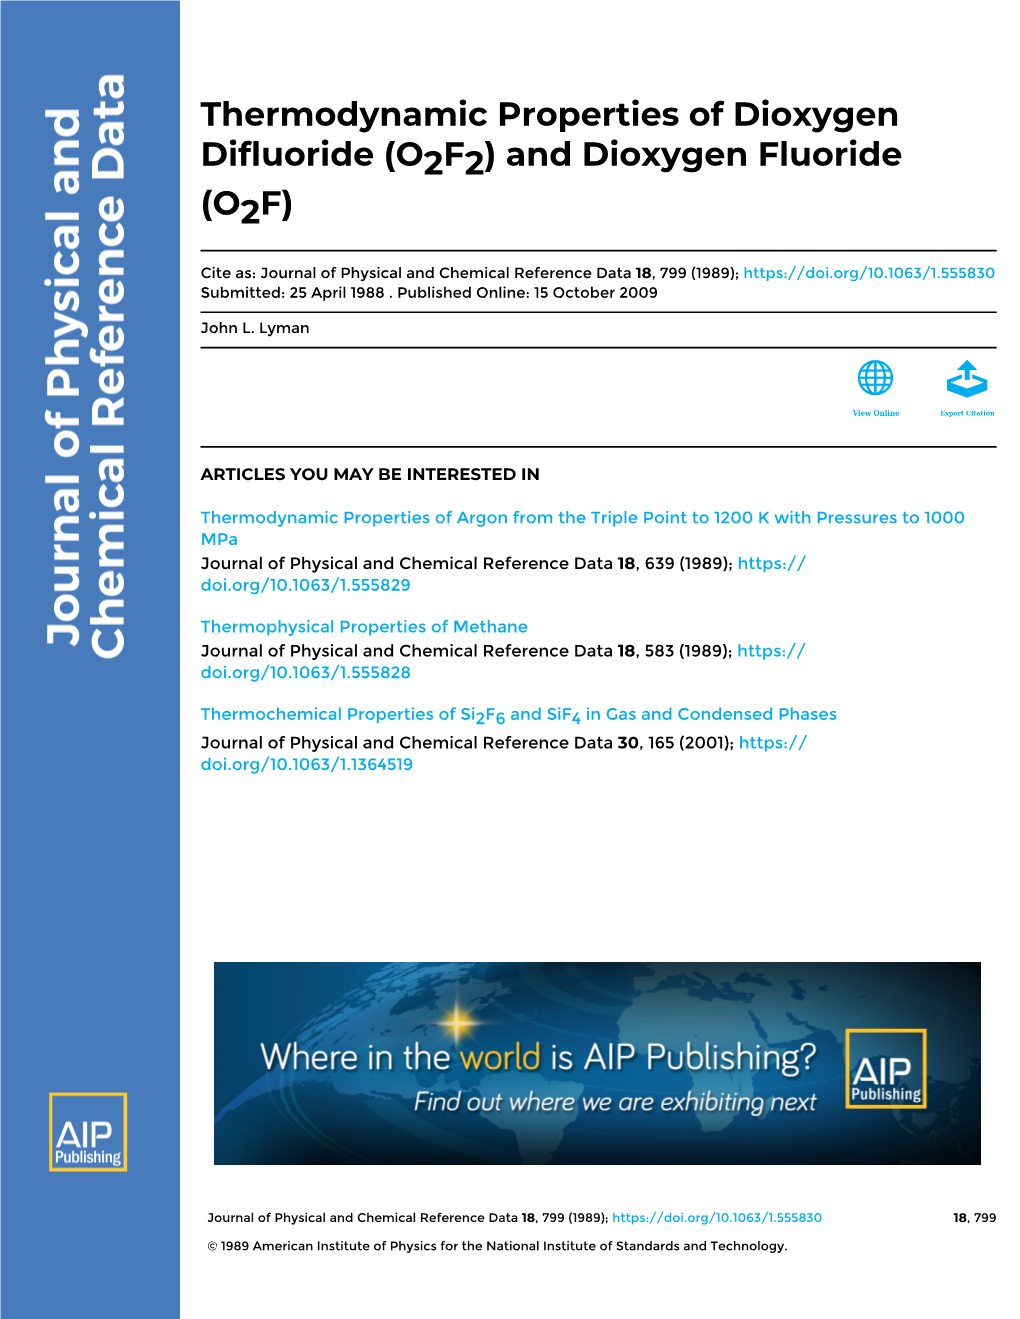 Thermodynamic Properties of Dioxygen Difluoride (O2F2) and Dioxygen Fluoride (O2F)